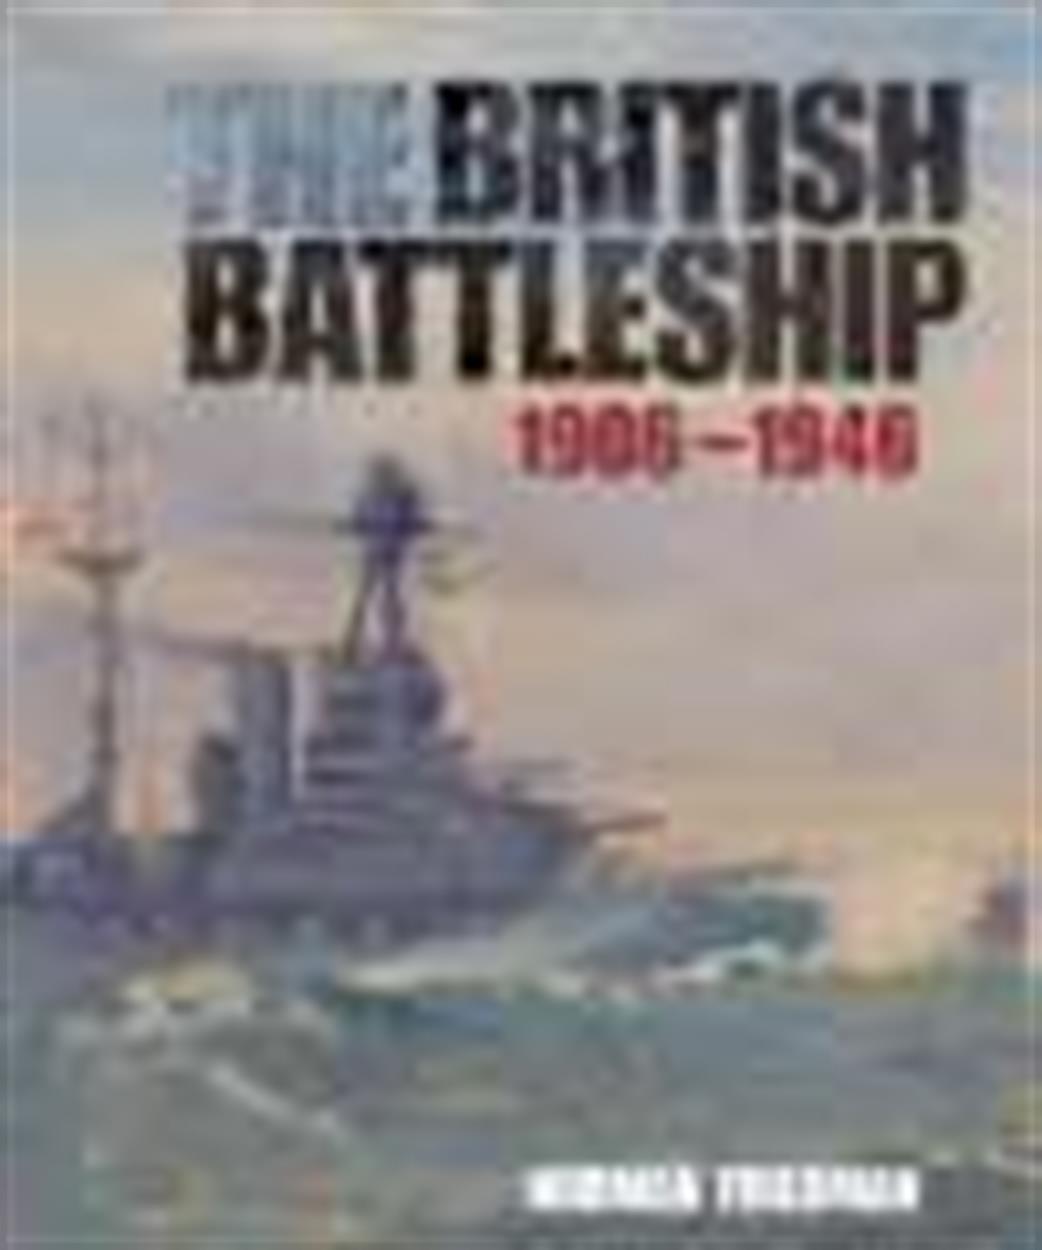 9781848322257 The British Battleship 1906 to 1946 Book by Norman Friedman